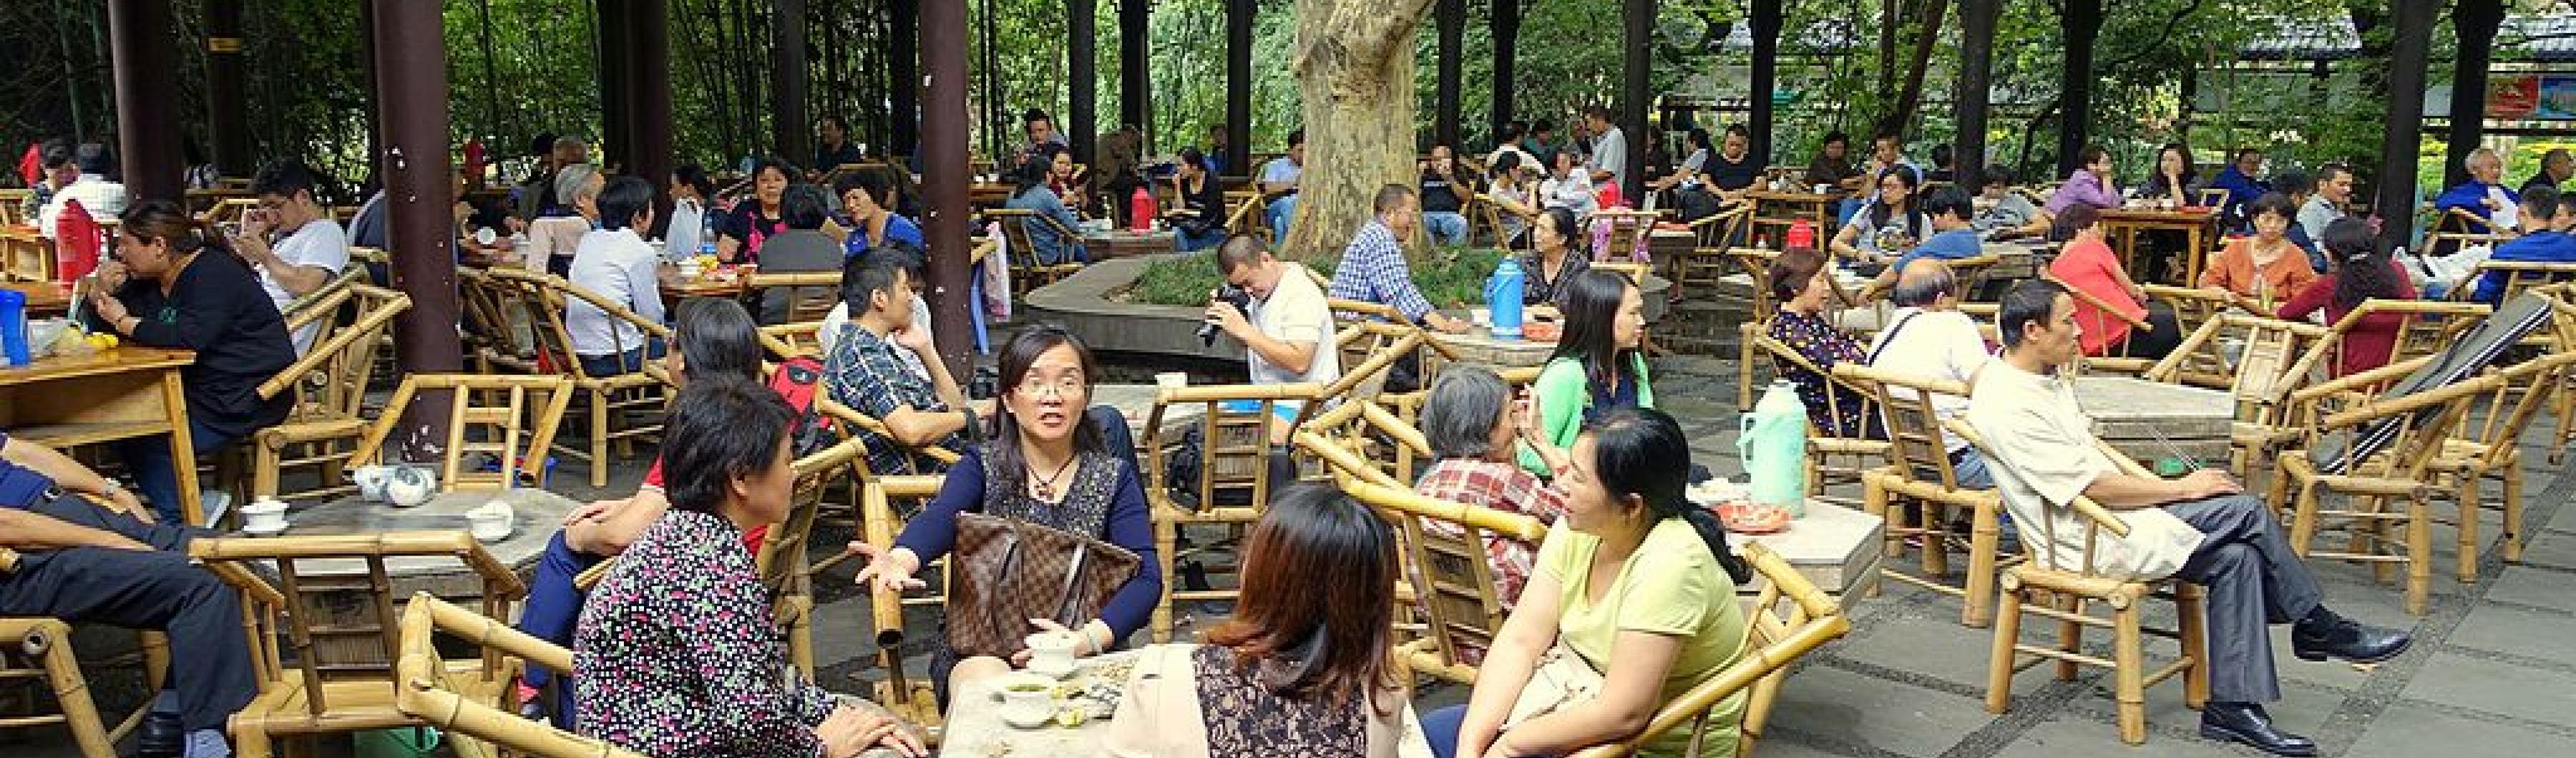 Kedai Teh Chengdu China Peoples Park